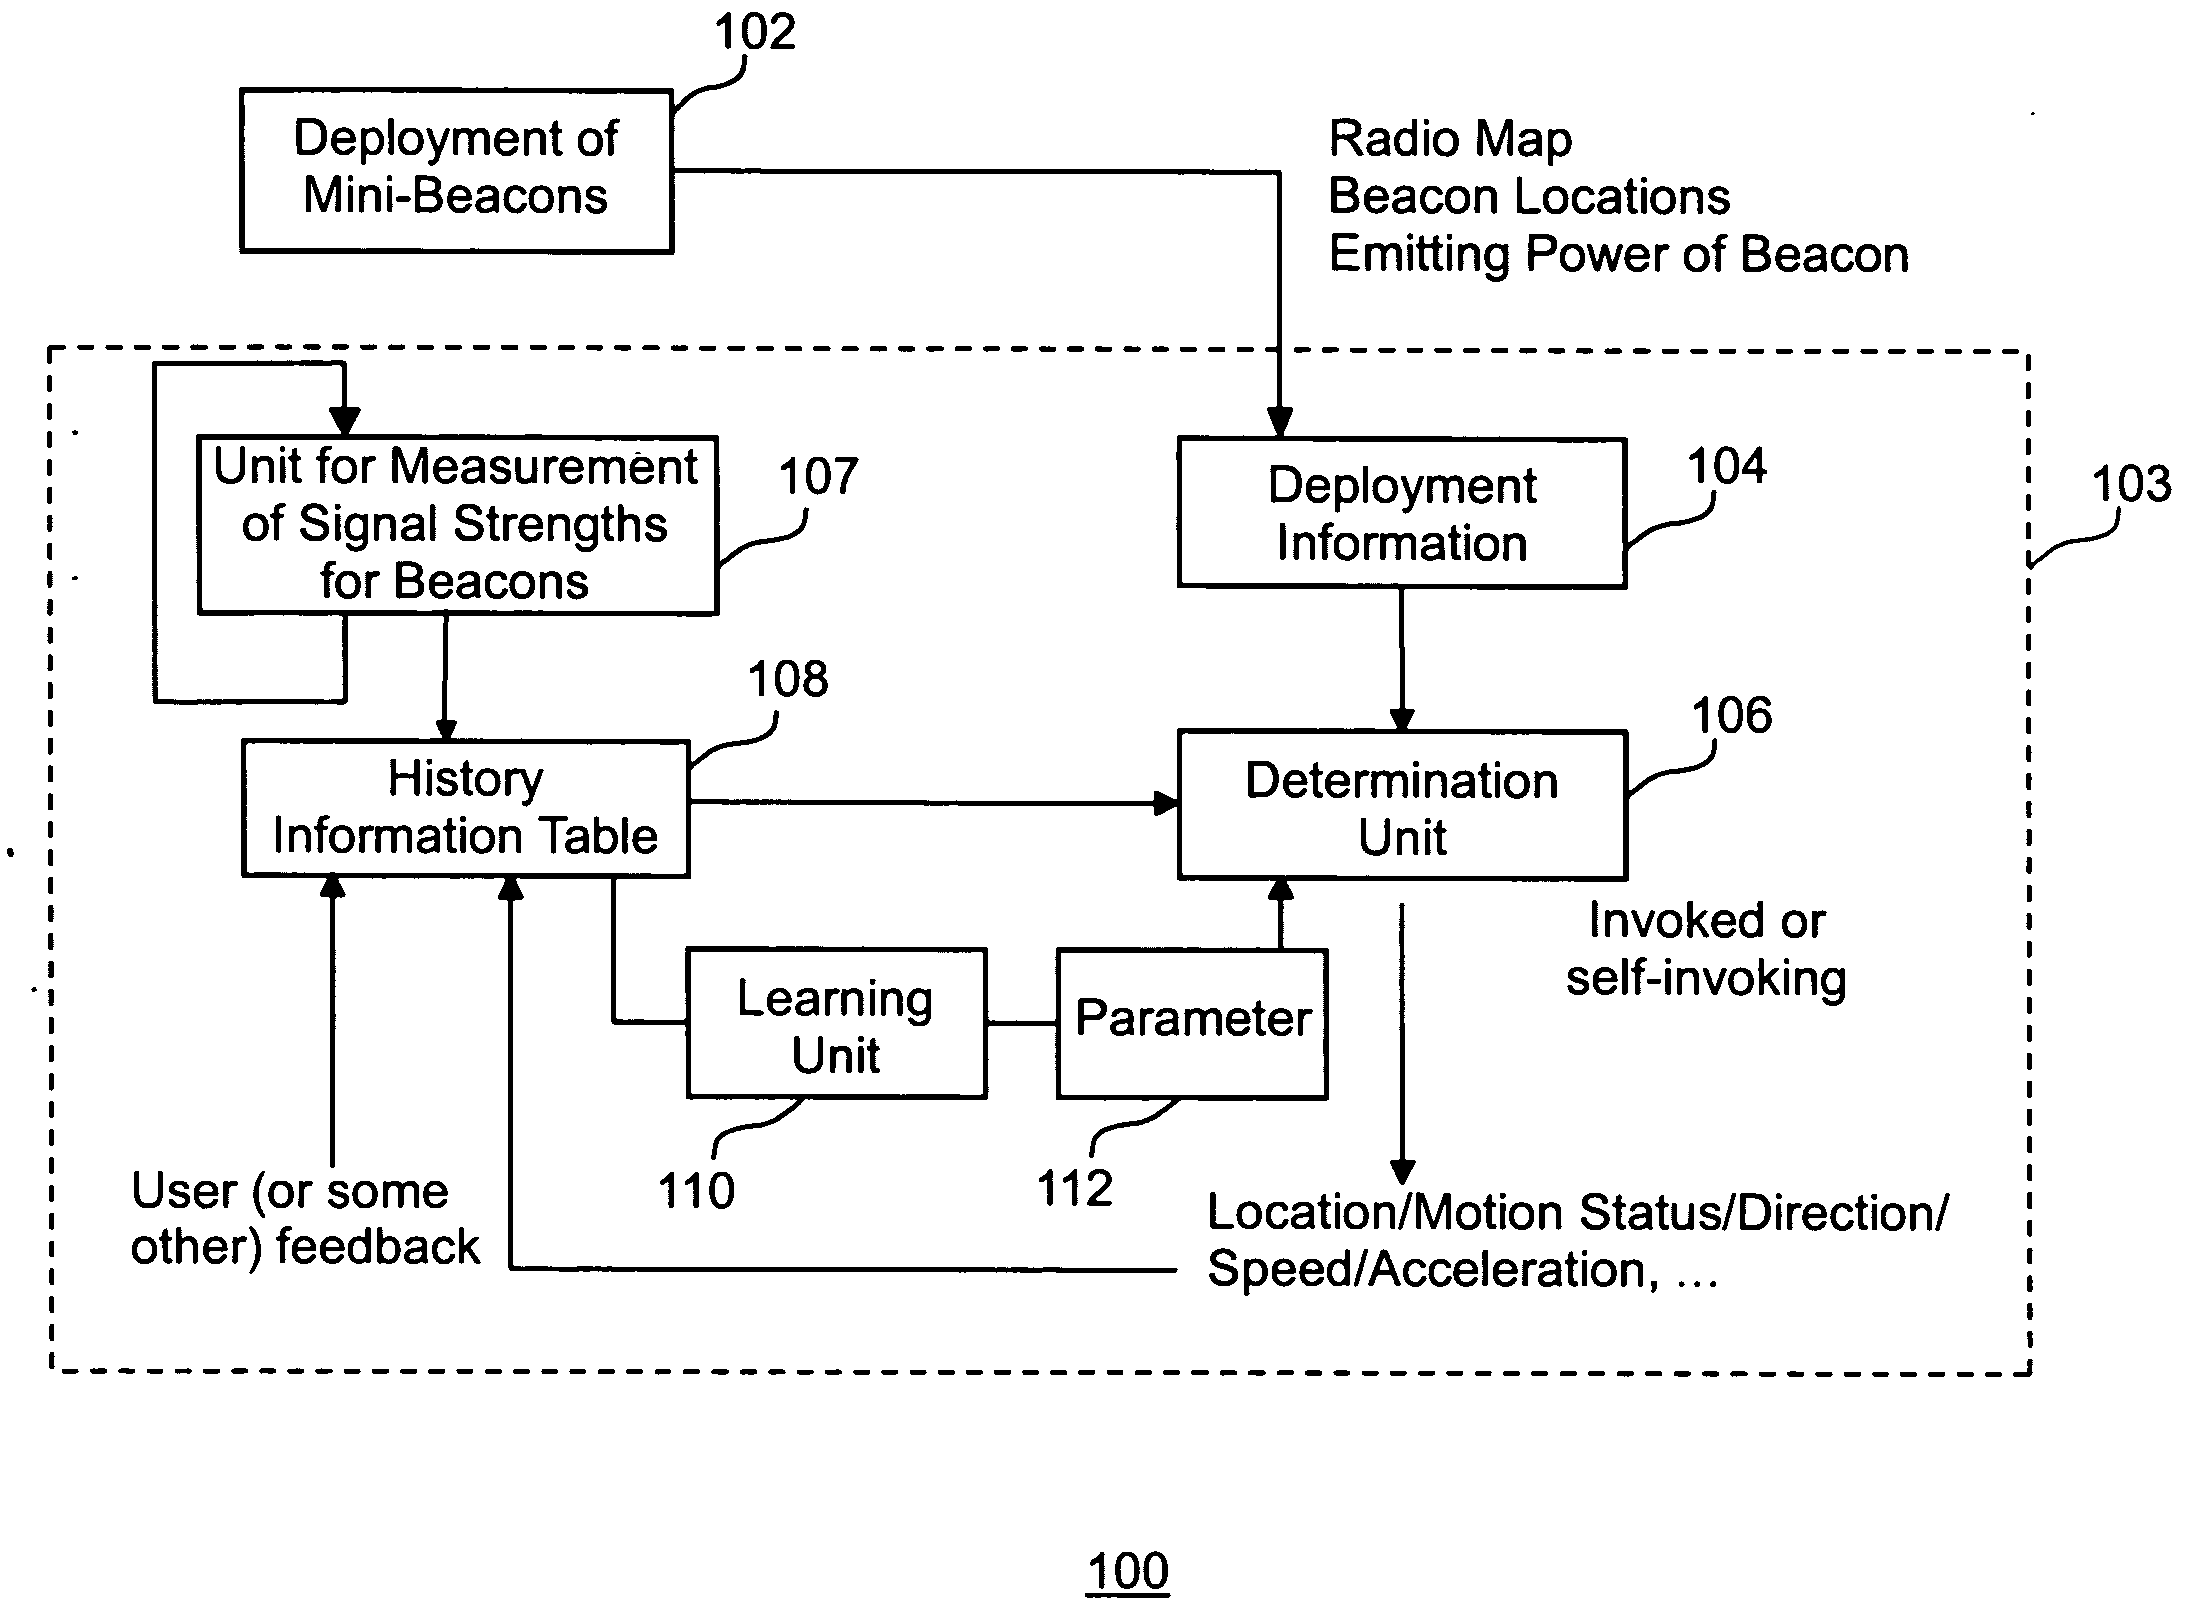 Method and apparatus for location determination using mini-beacons